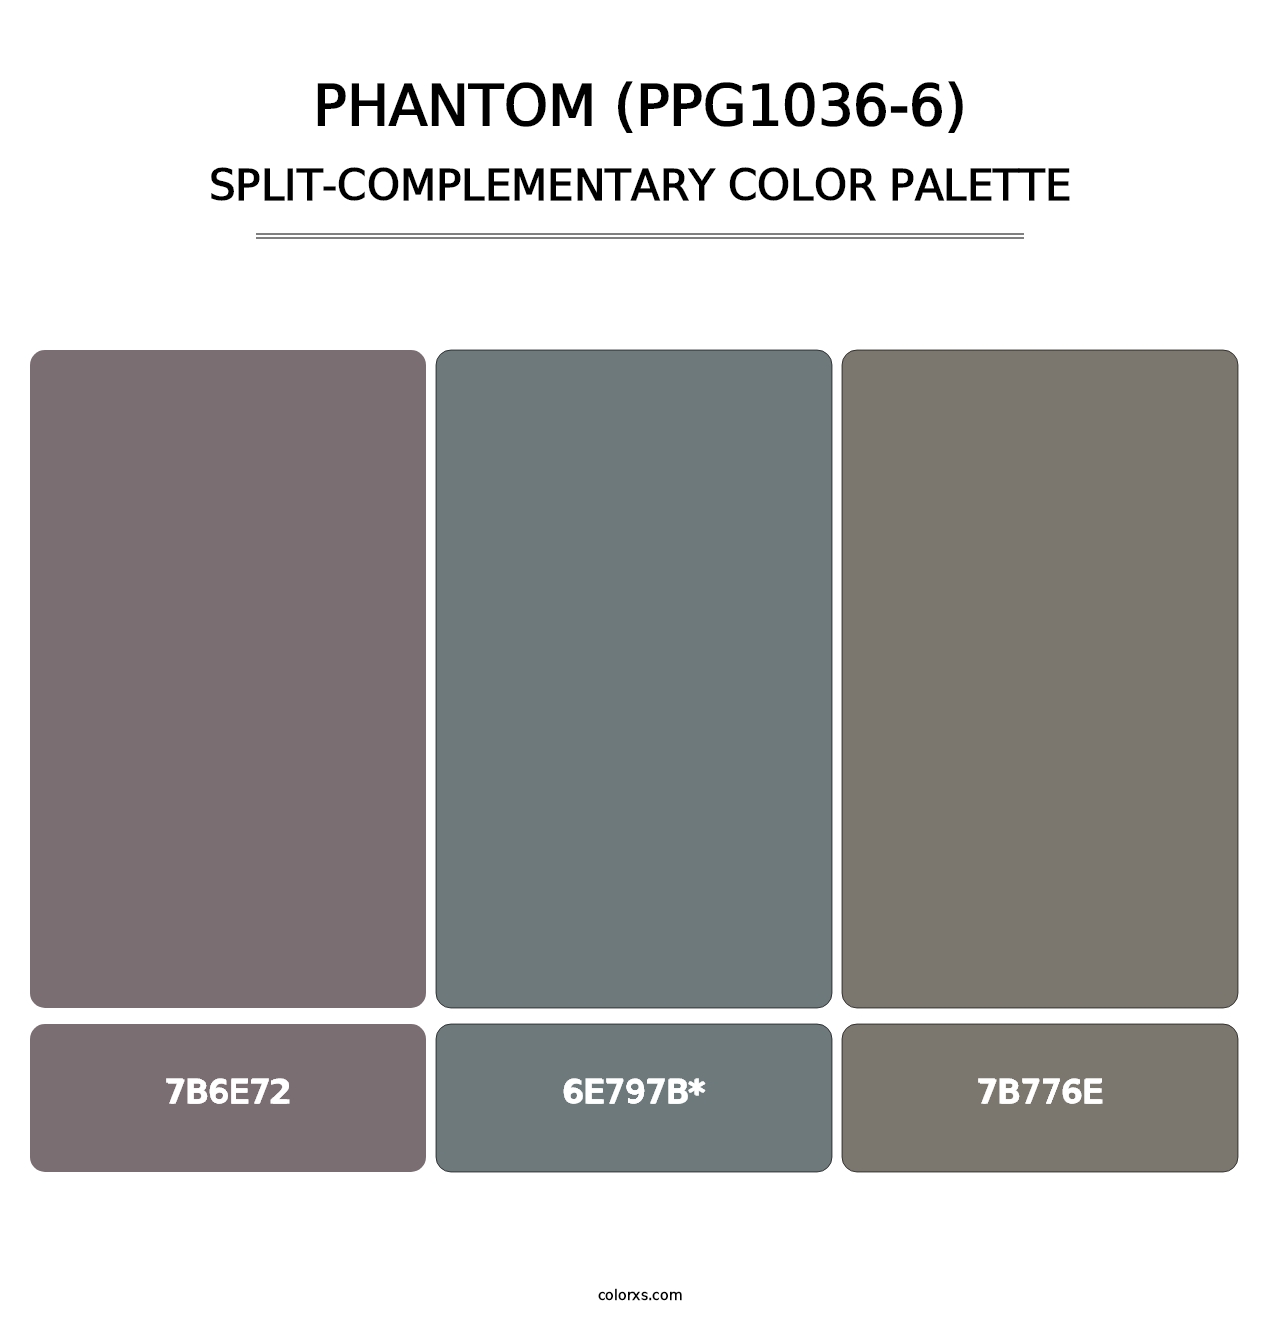 Phantom (PPG1036-6) - Split-Complementary Color Palette